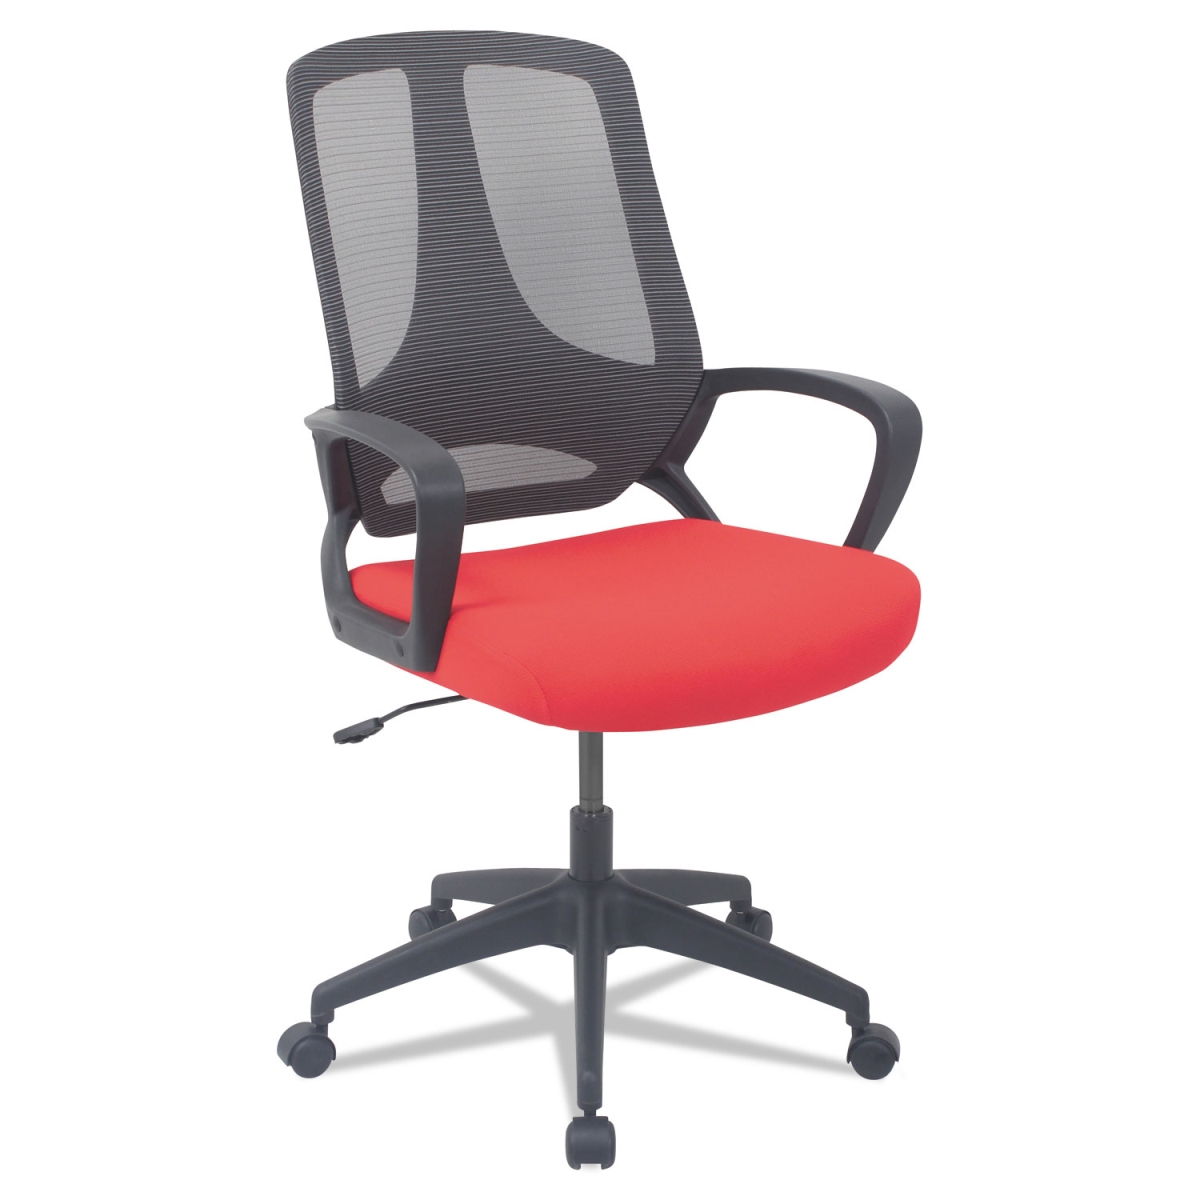 Alera Alemb4738 Mb Series Mesh Mid-back Office Task Chair, Red & Black